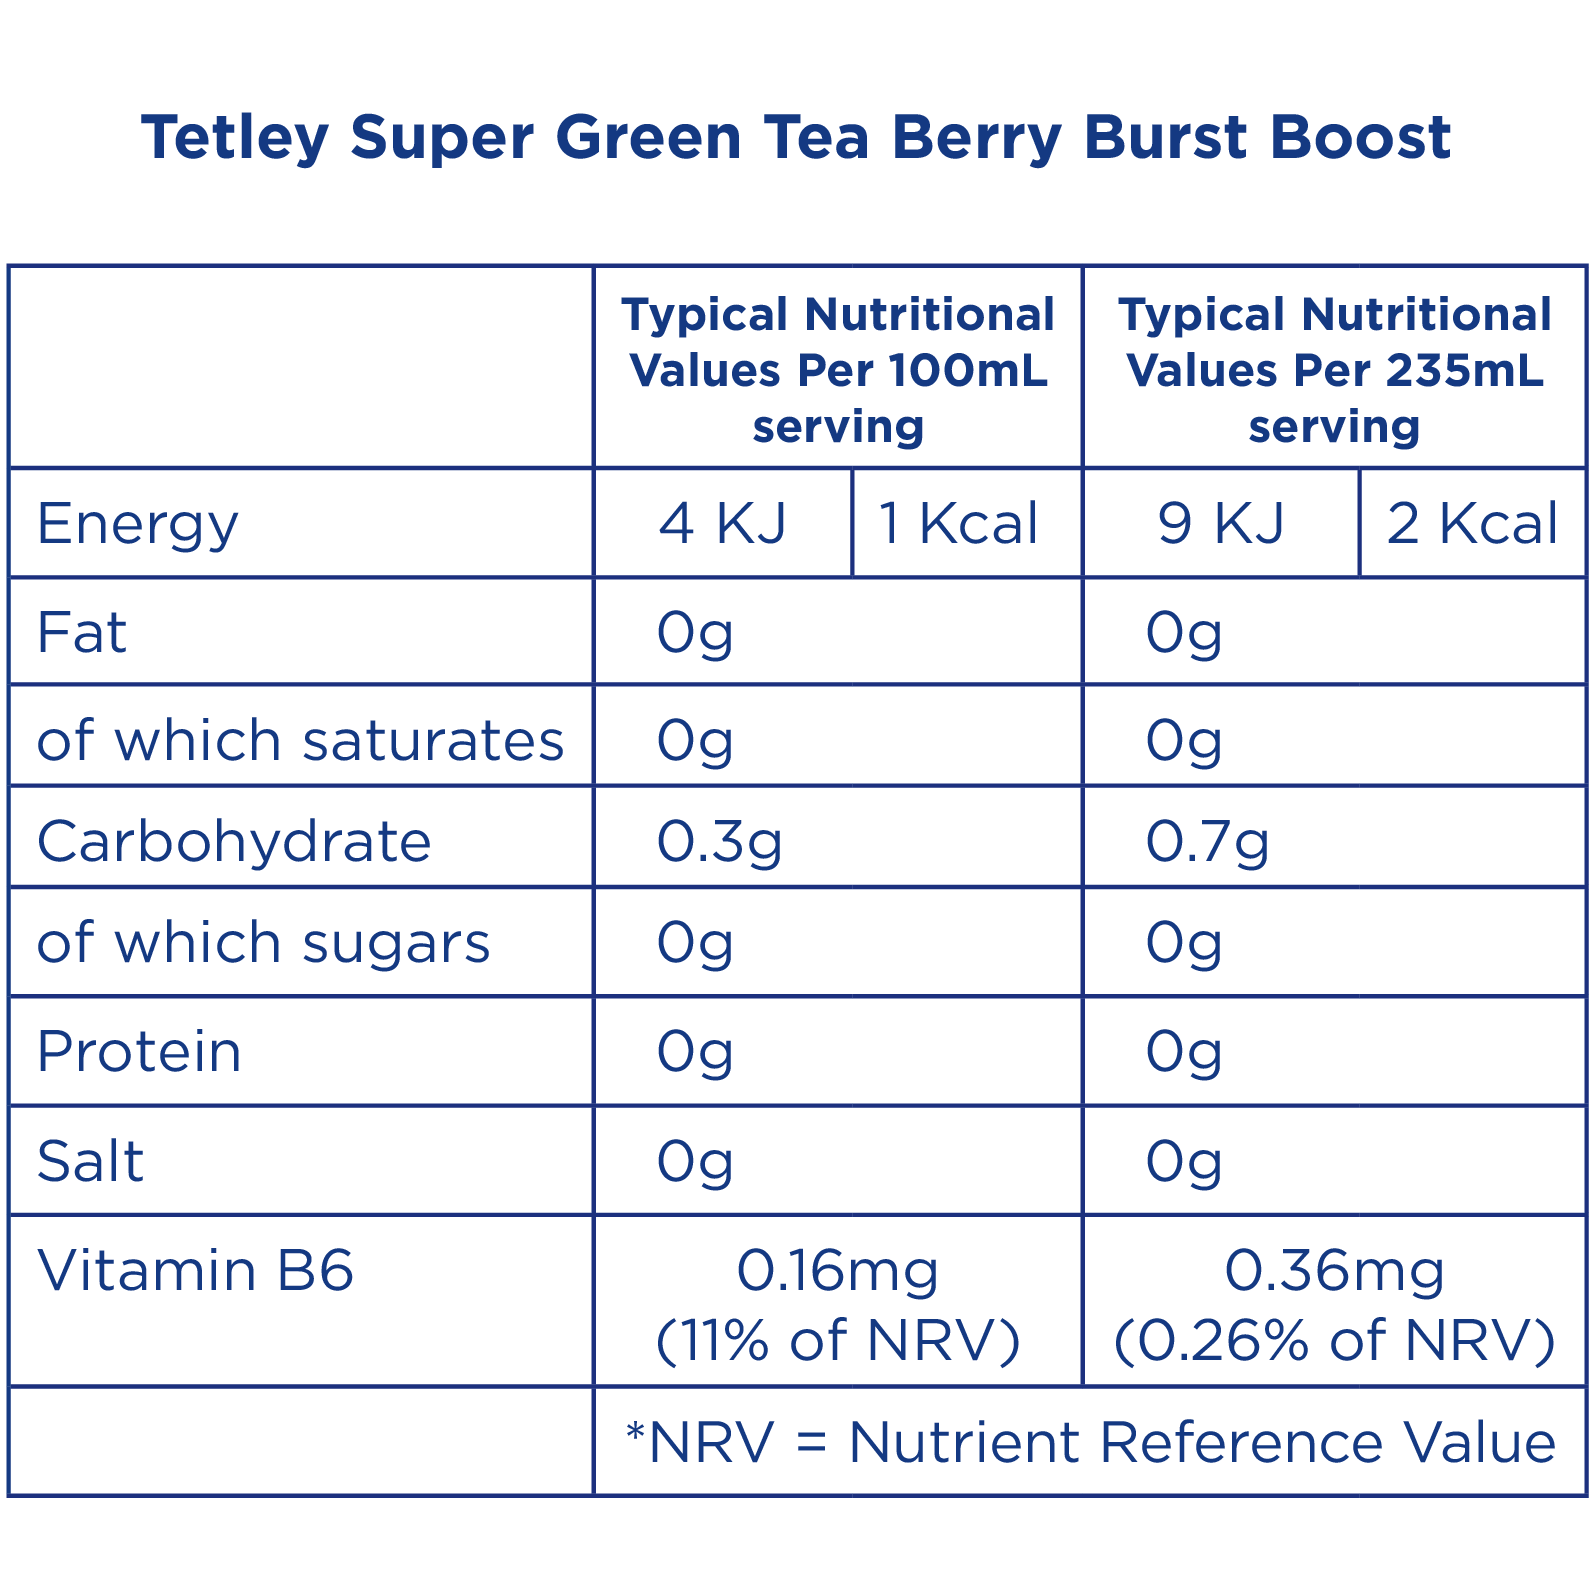 Tetley Super Green Tea Boost Berry Burst - Nutritional Information